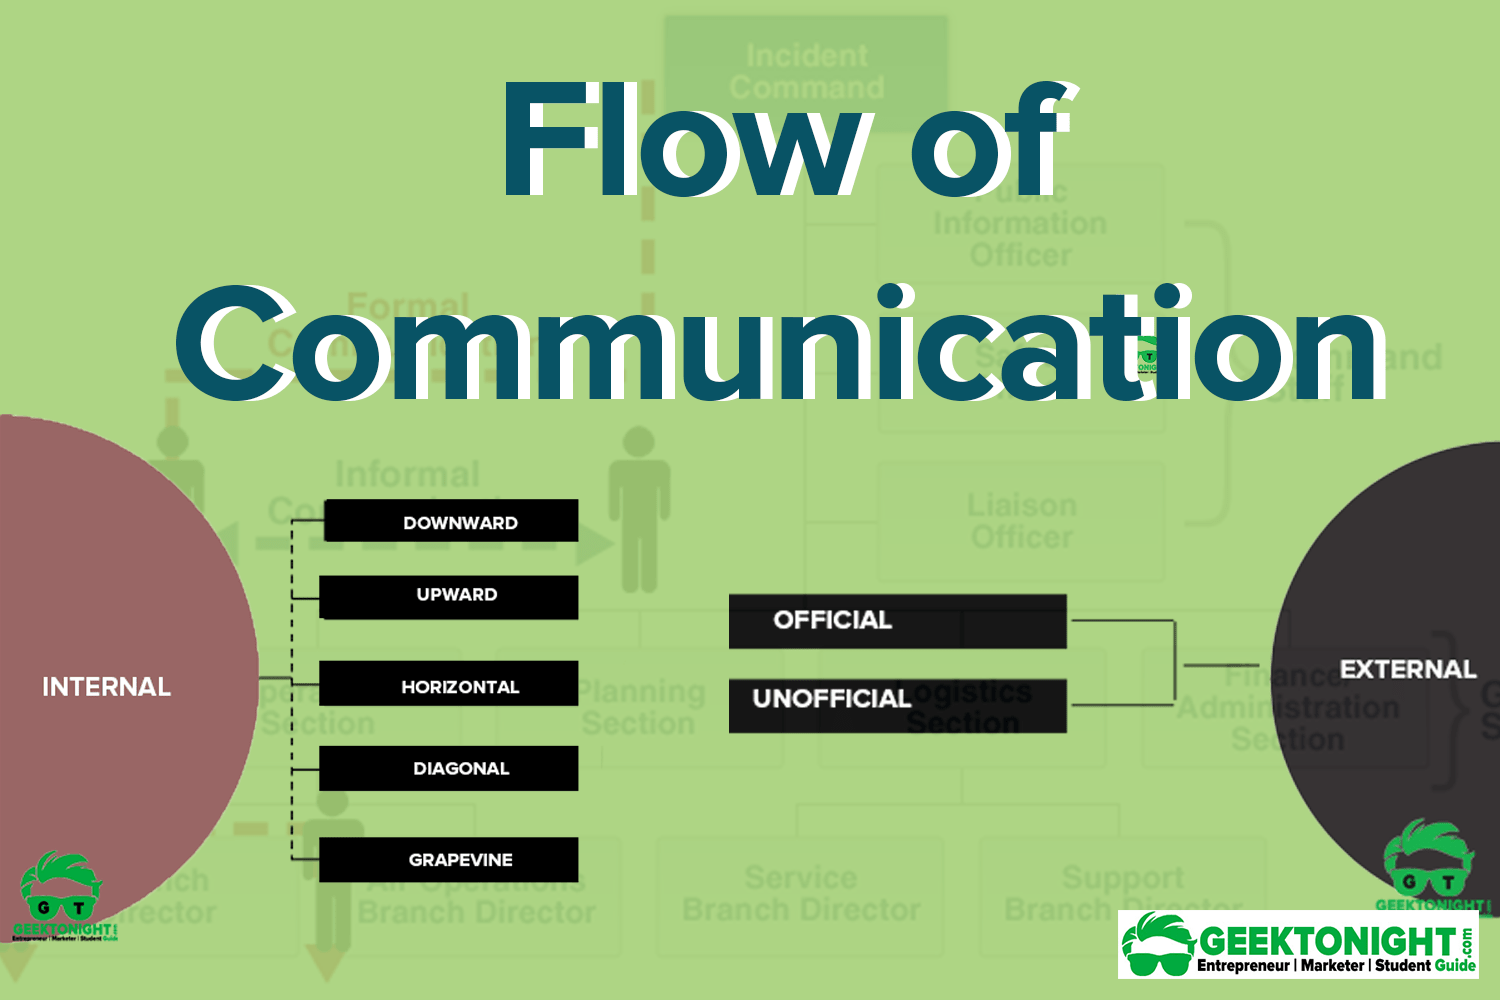 flow of communication definition essays